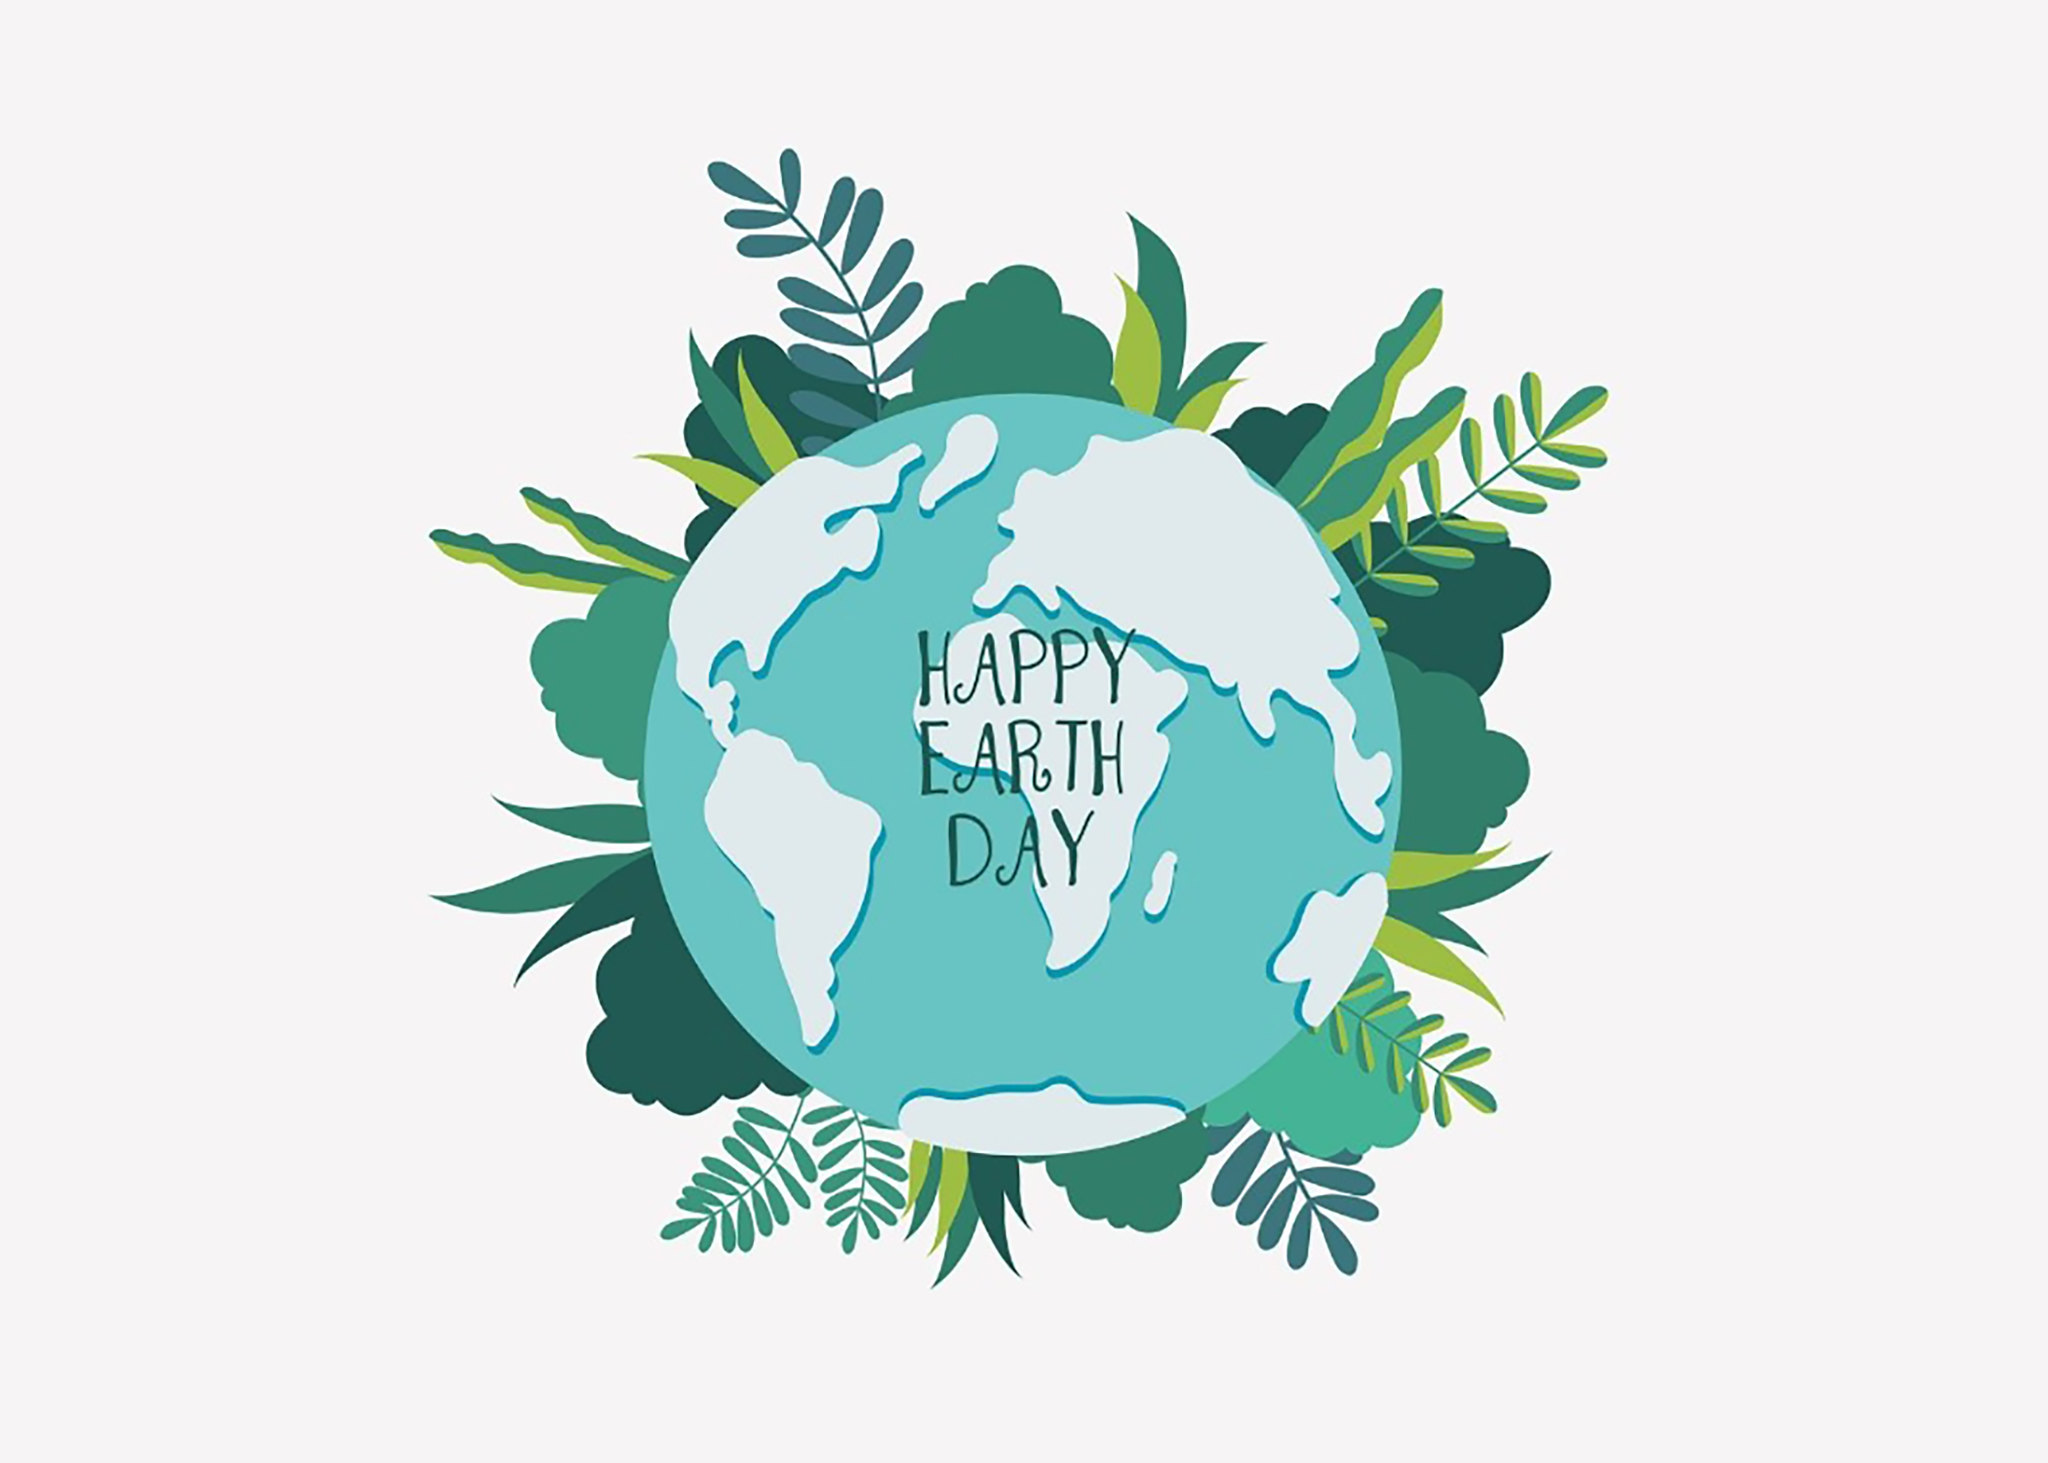 Earth Day logo